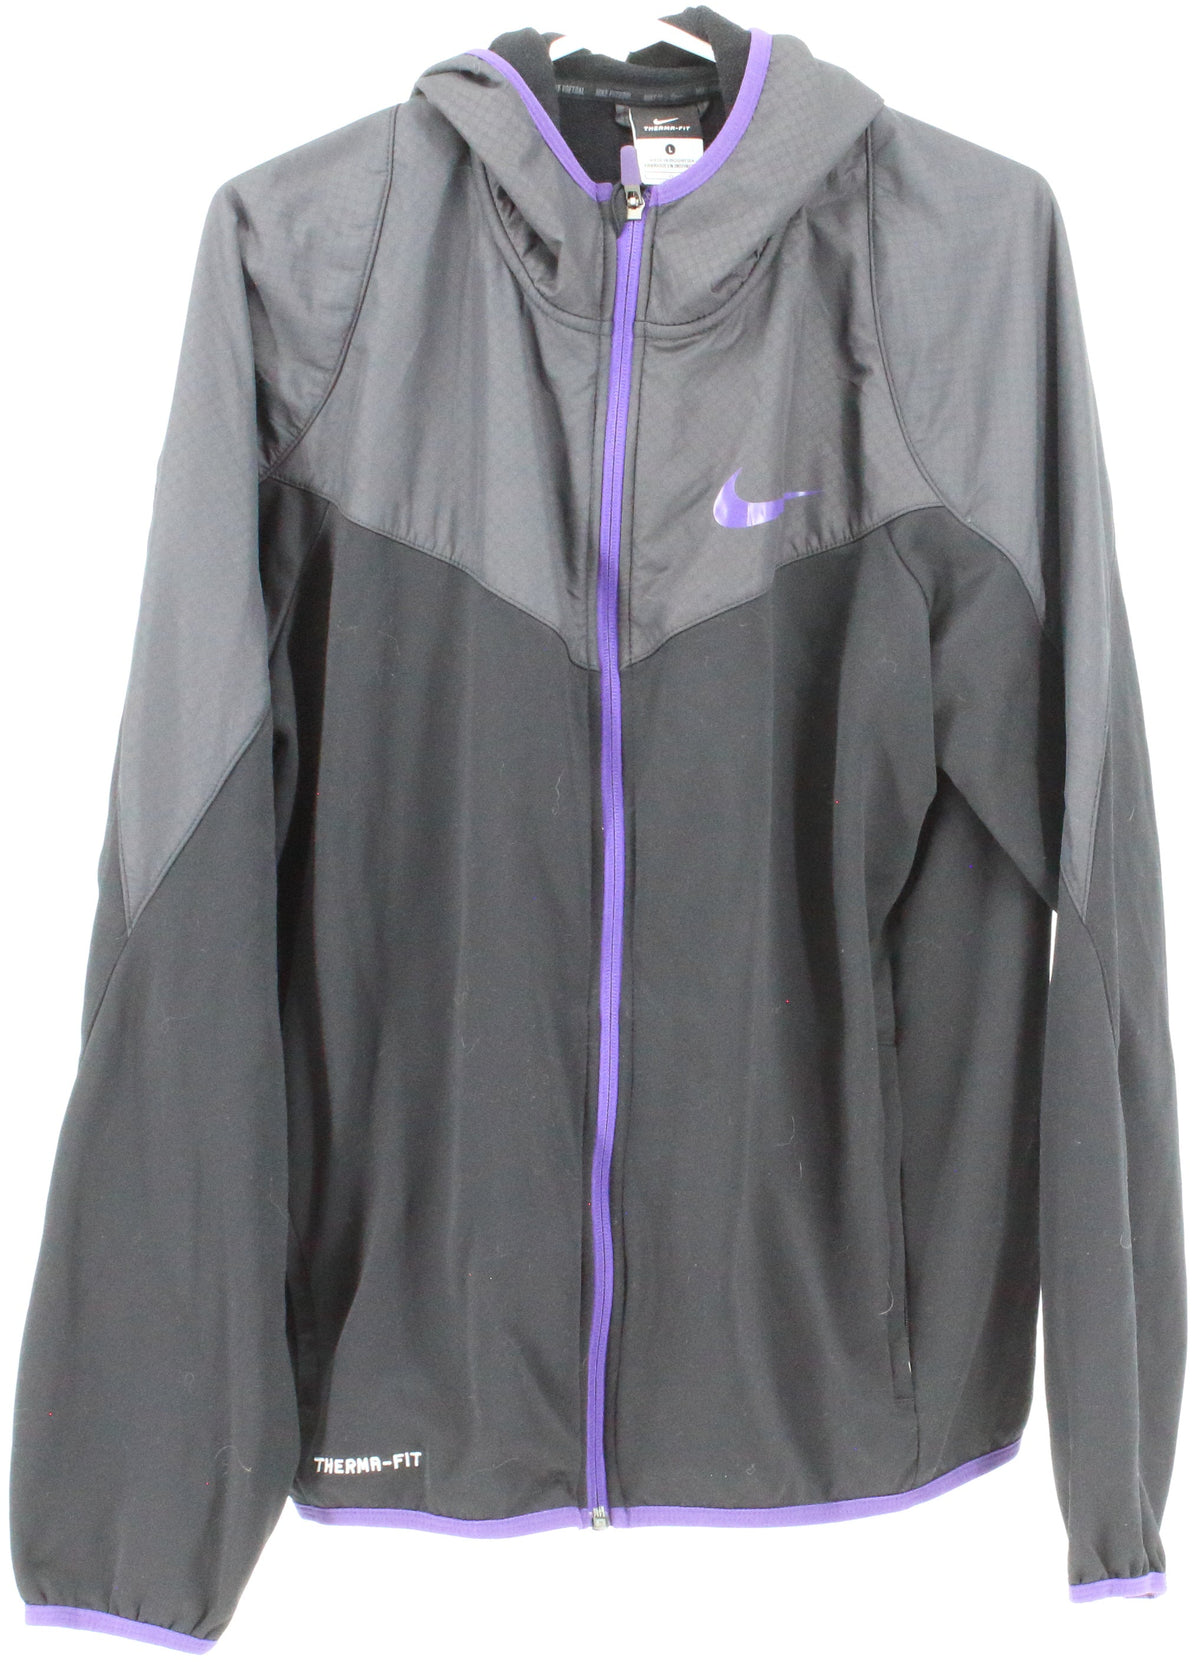 Nike Therma-Fit Black Grey and Purple Full Zip Hooded Jacket